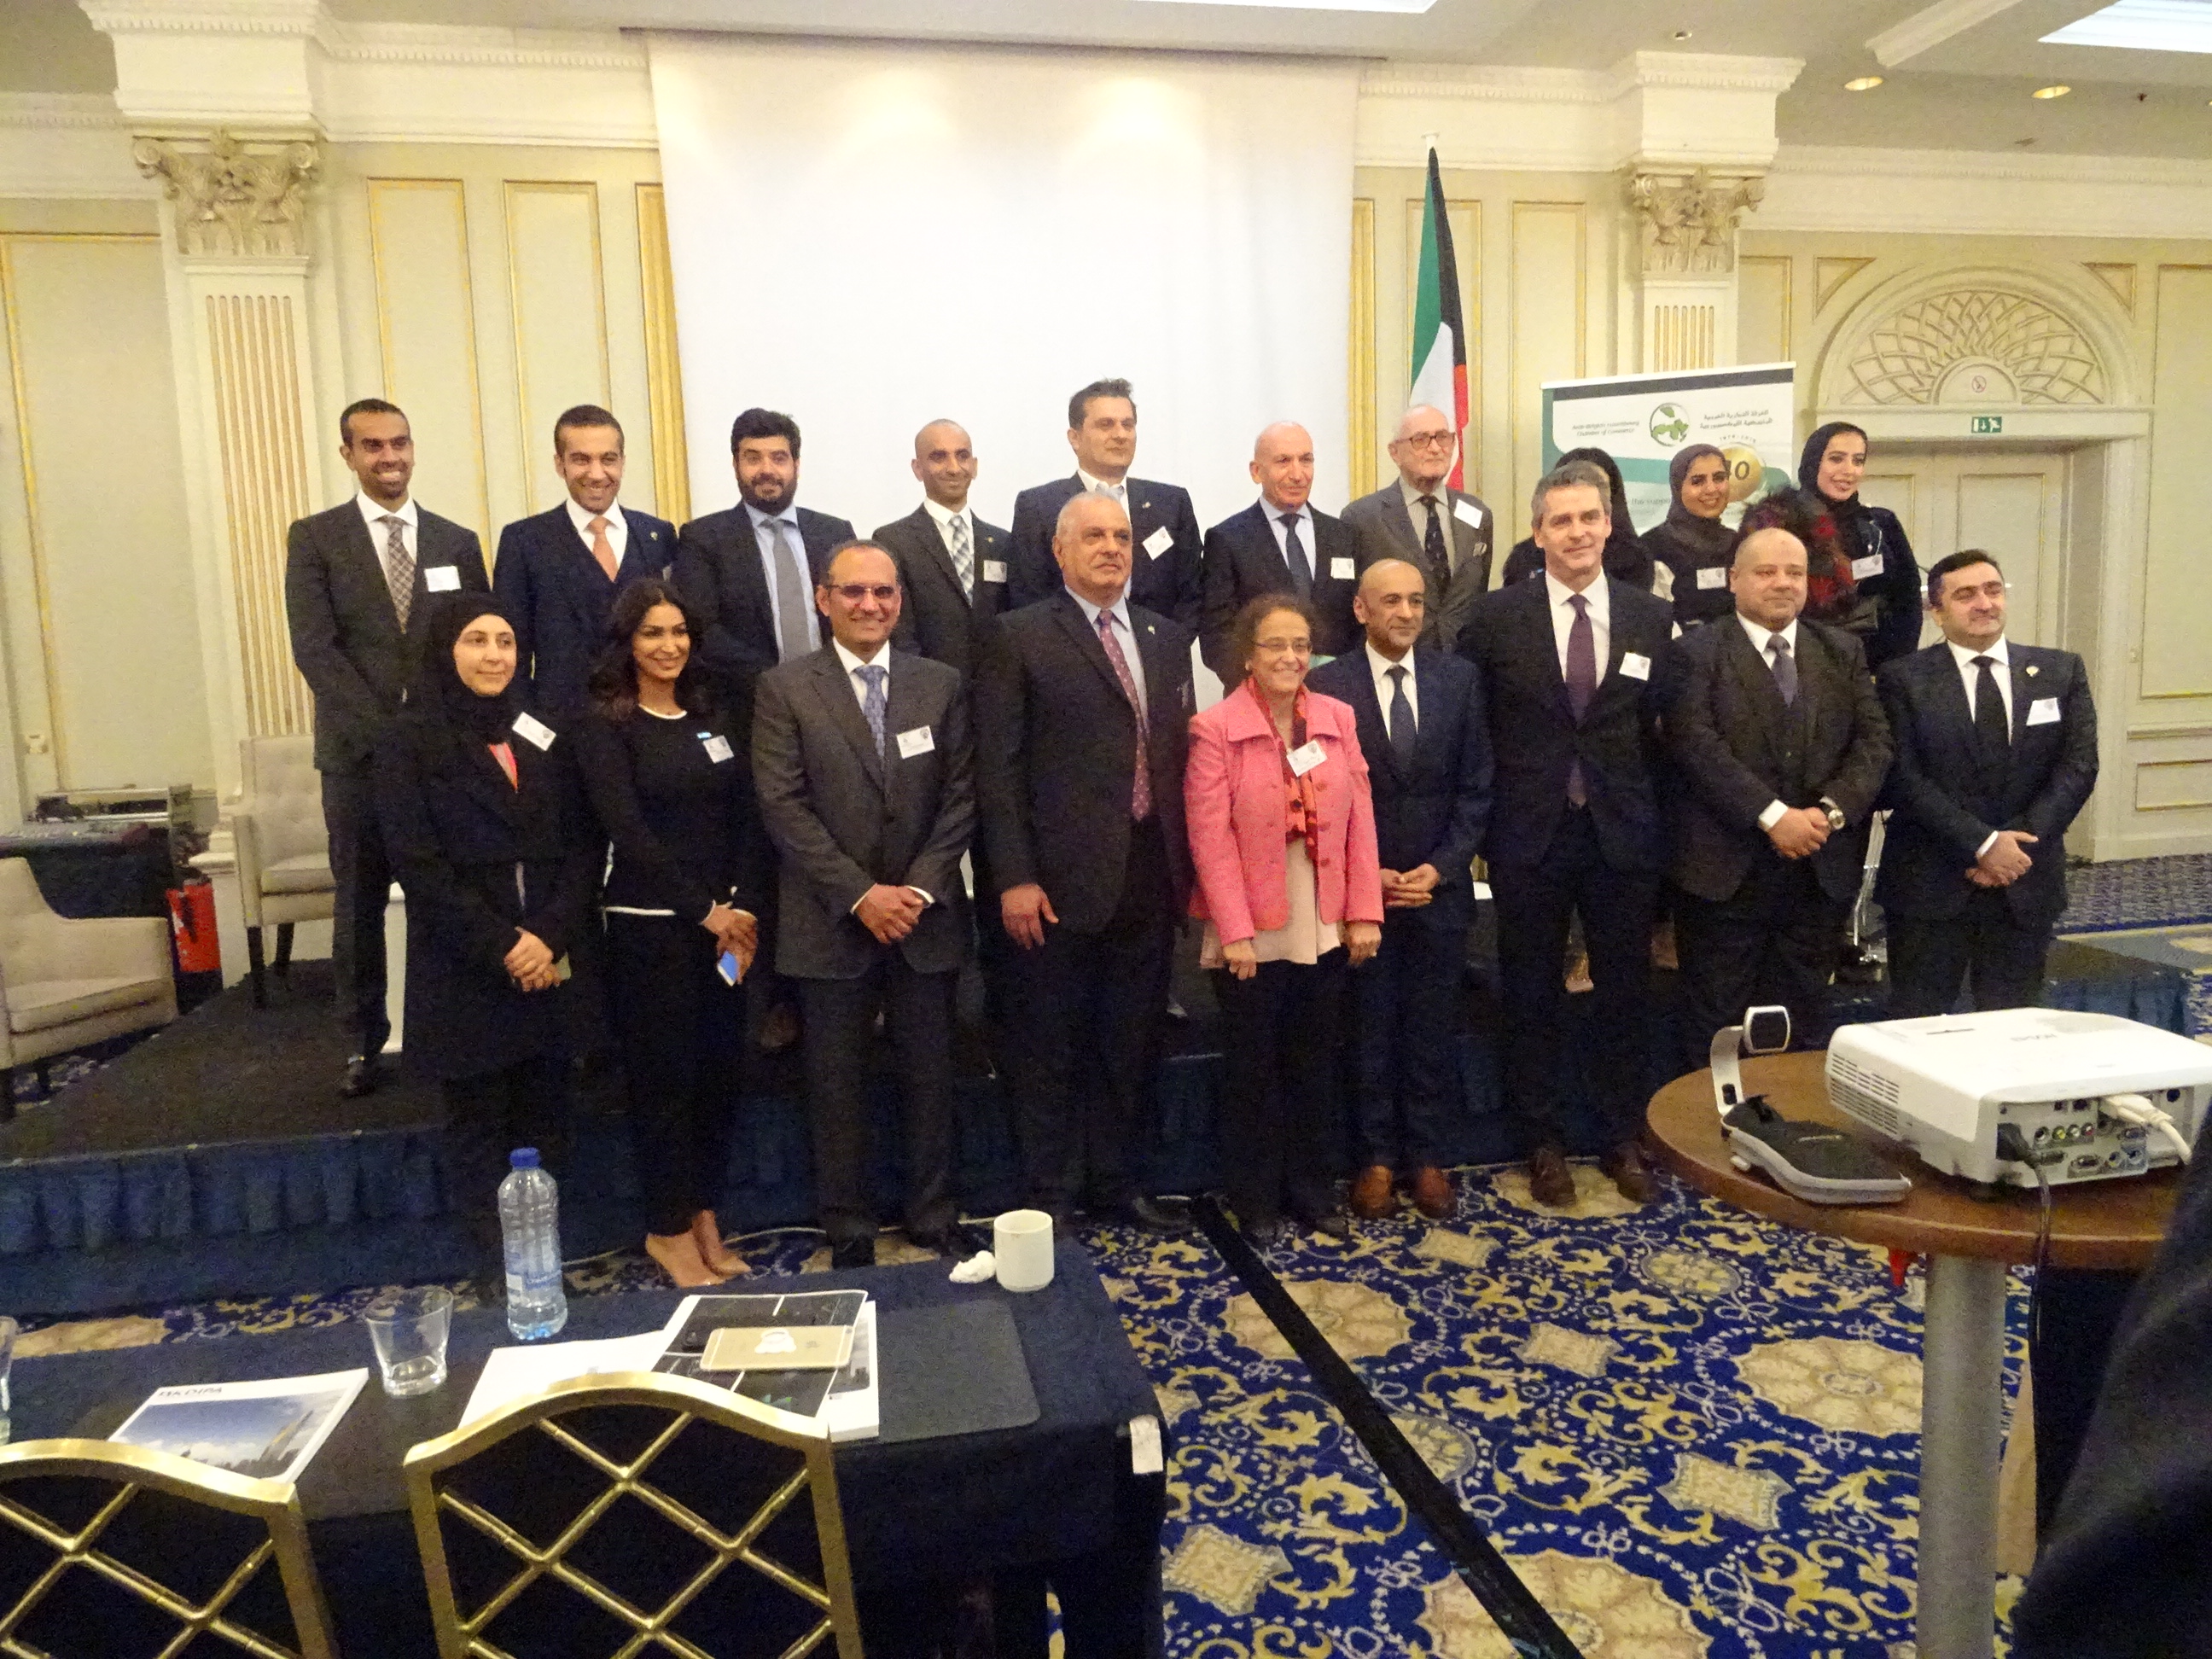 Kuwaiti participants at The Kuwait Economic Forum (Kuwait Vision 2035) in a group photo